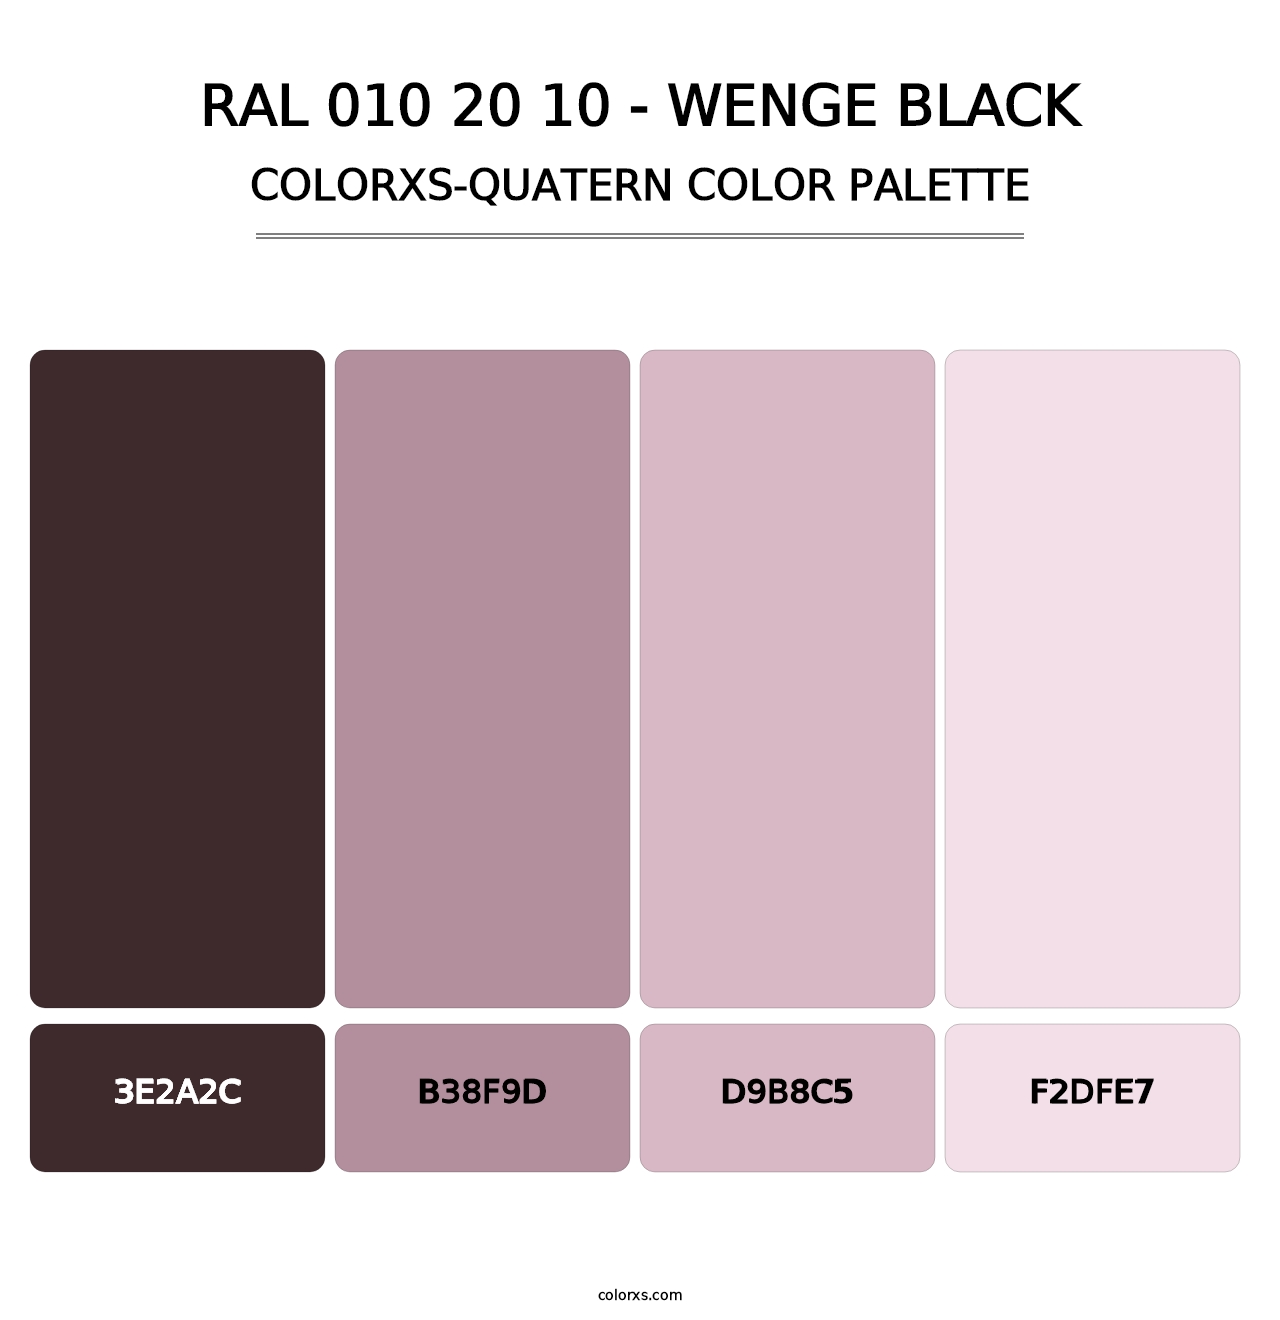 RAL 010 20 10 - Wenge Black - Colorxs Quatern Palette